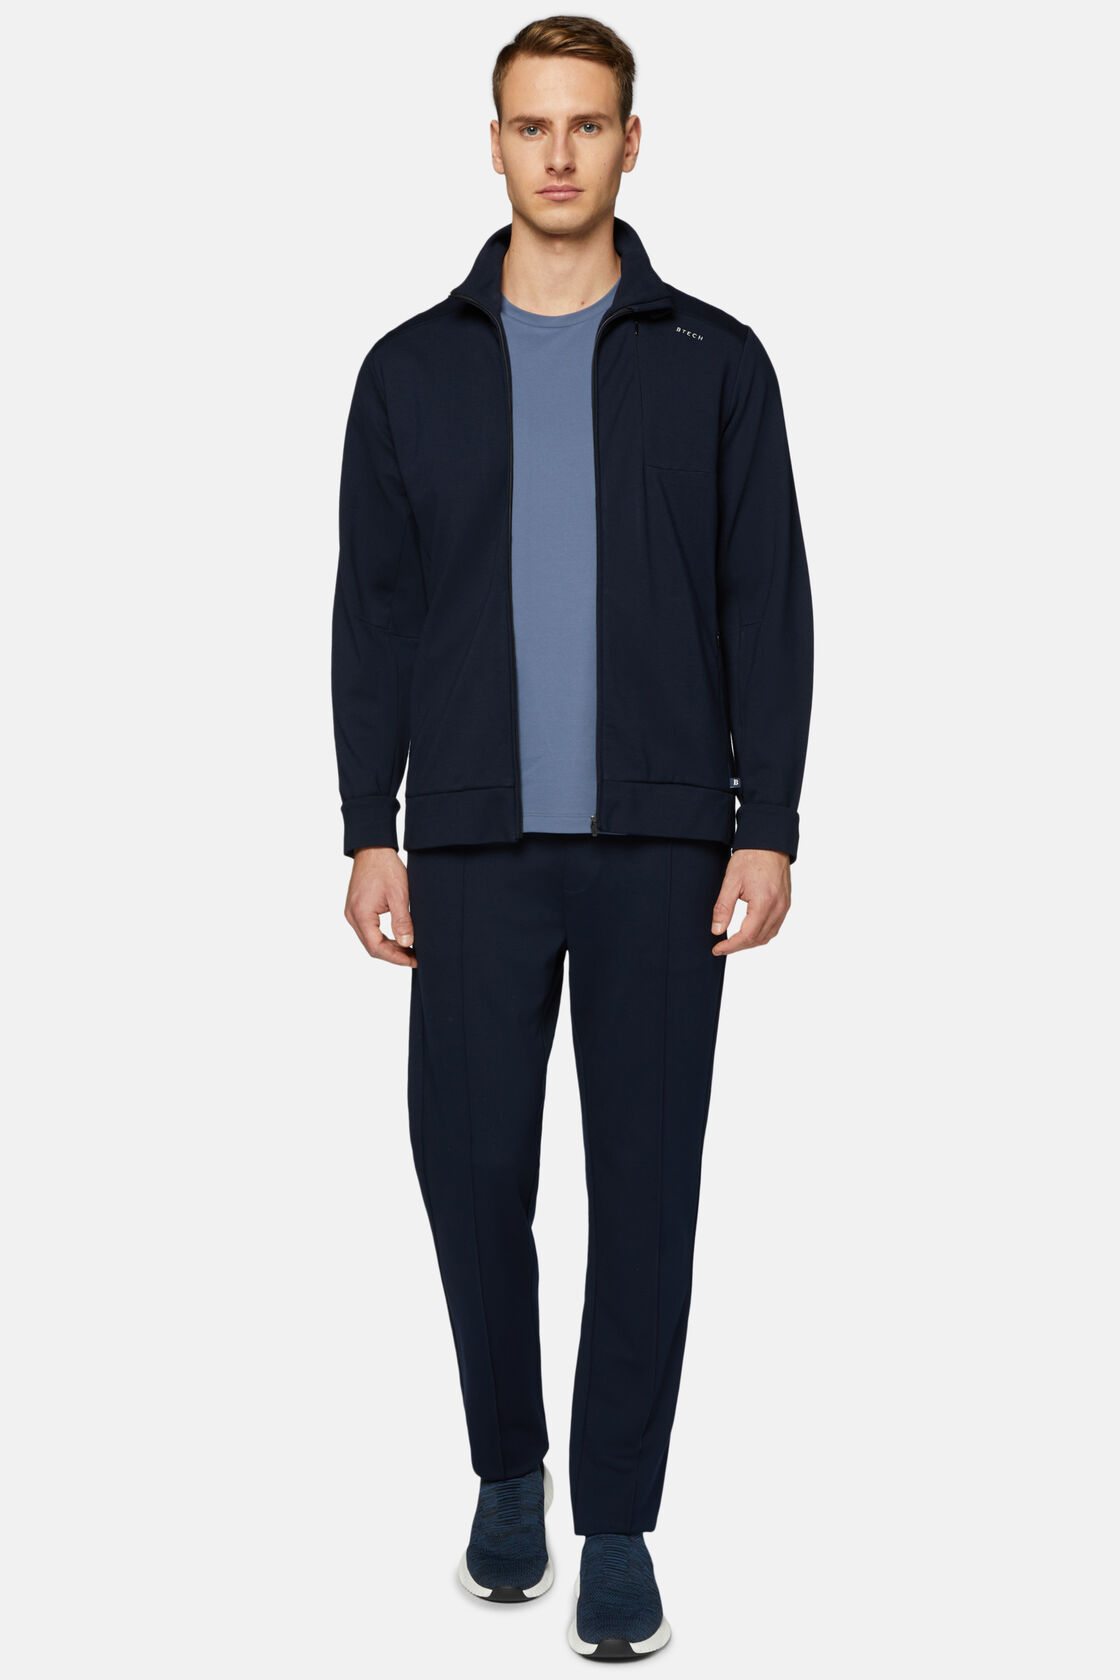 Full-Zip Sweatshirt in Stretch Technical Interlock, Navy blue, hi-res